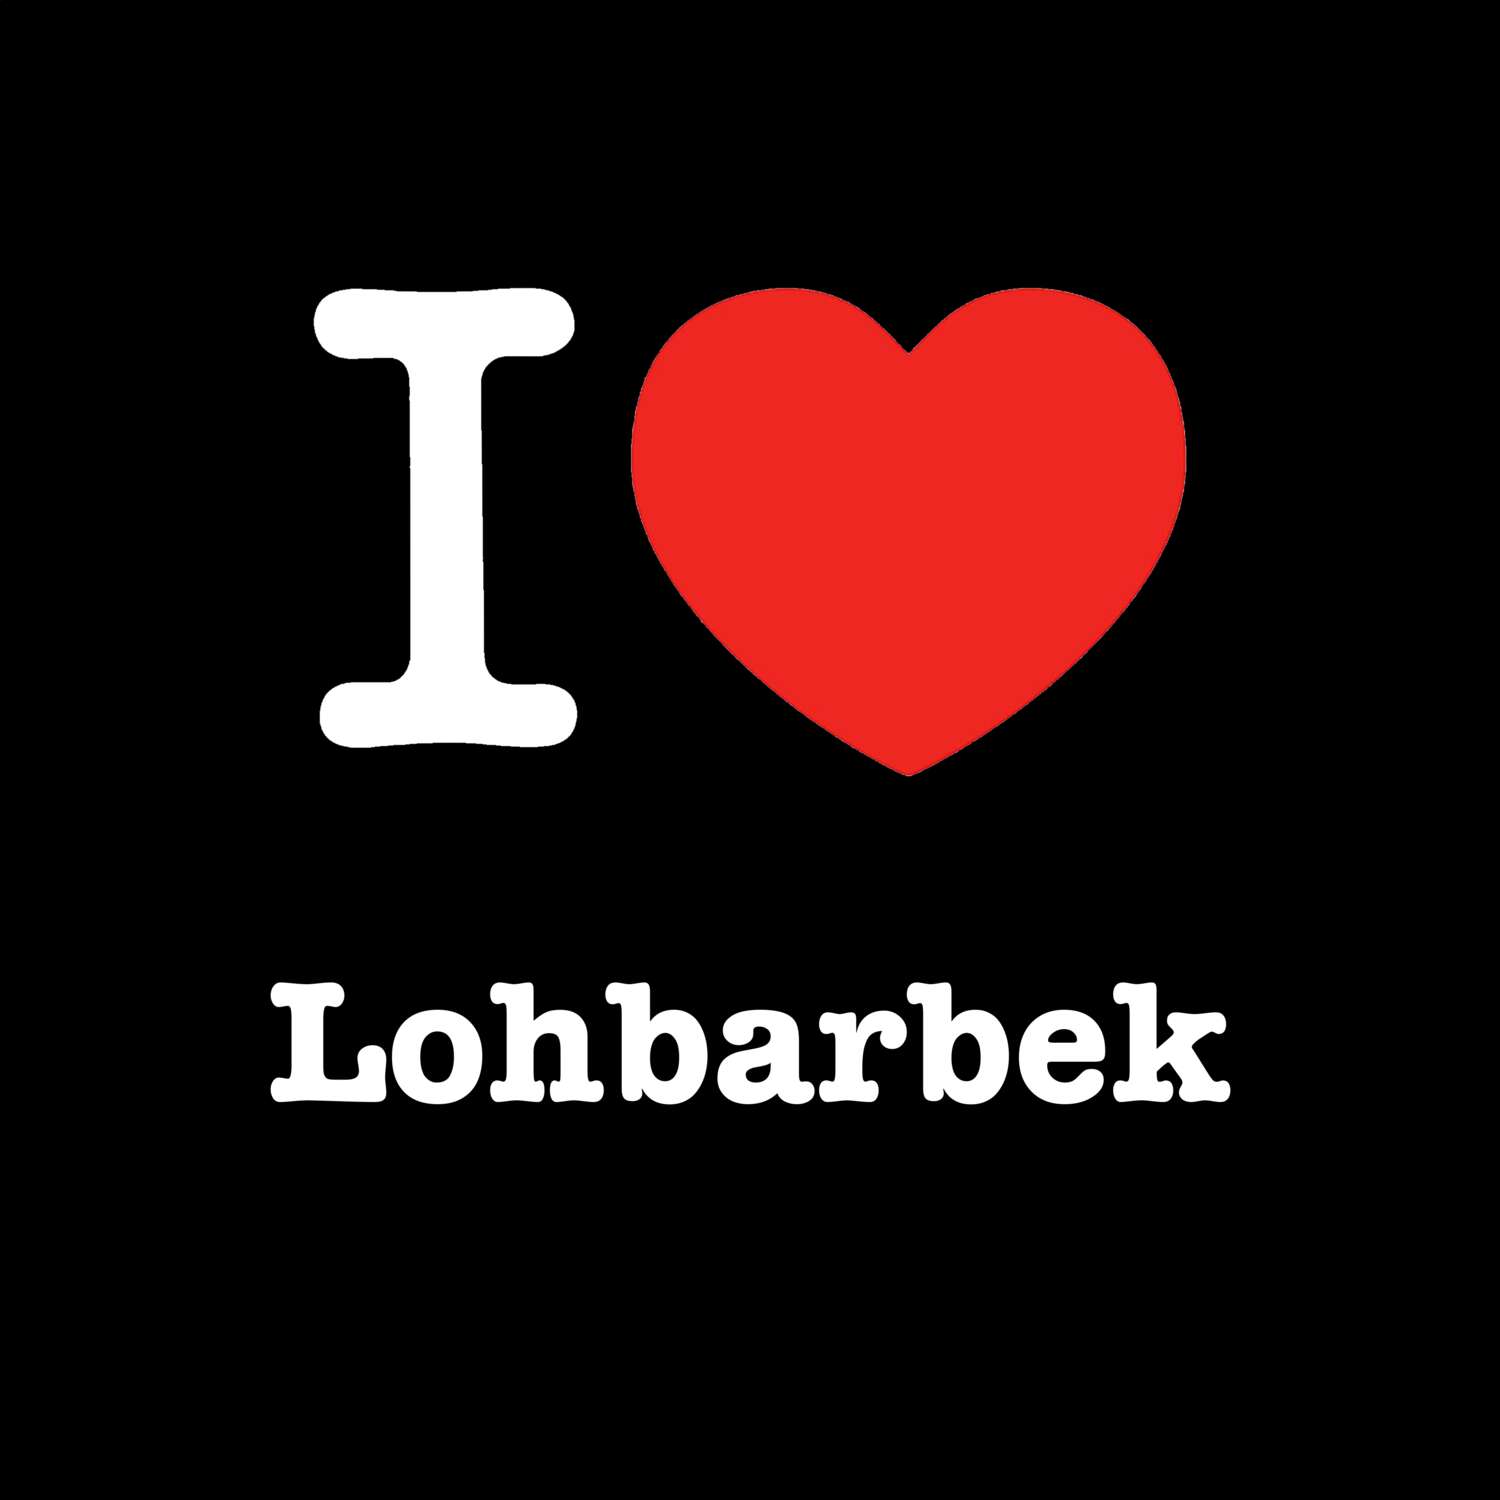 Lohbarbek T-Shirt »I love«